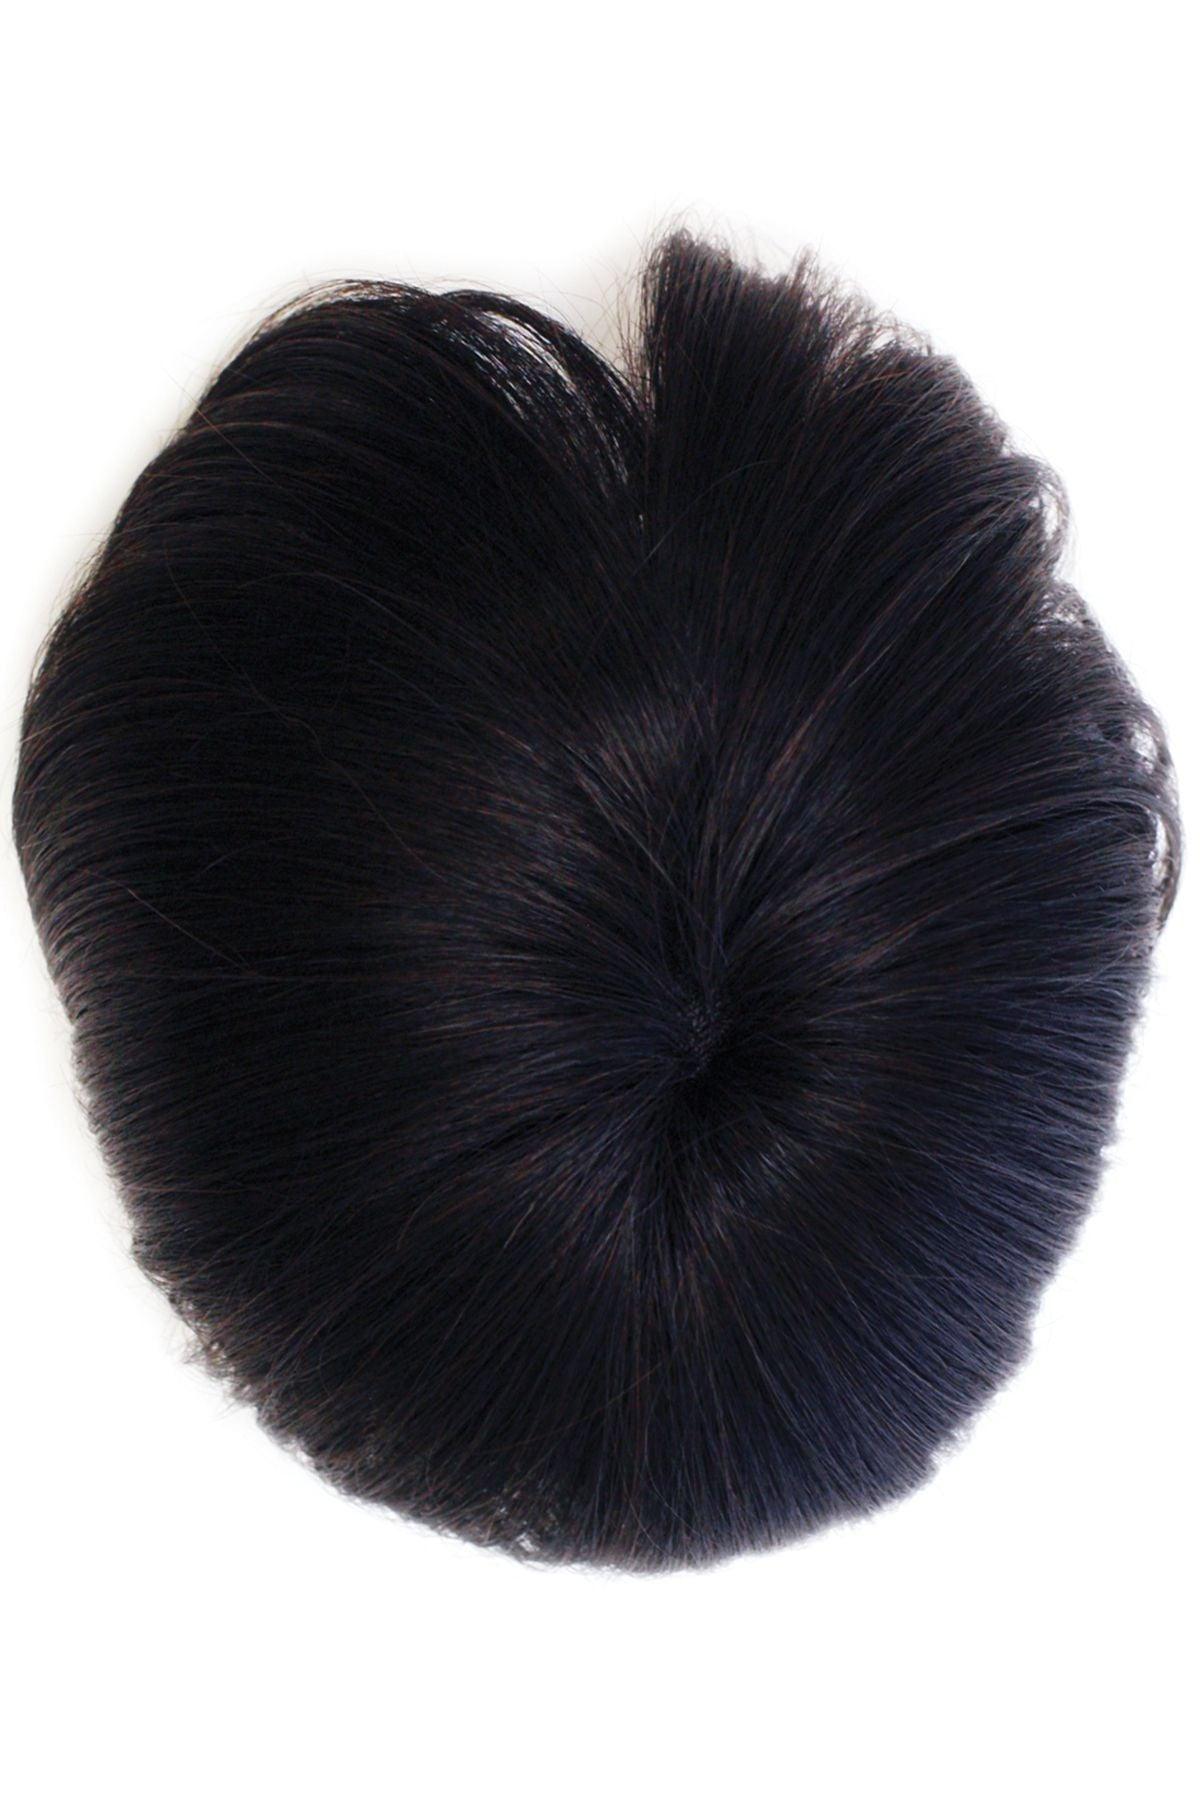 Mono Wiglet 5 Hairpiece by Estetica Designs | Synthetic